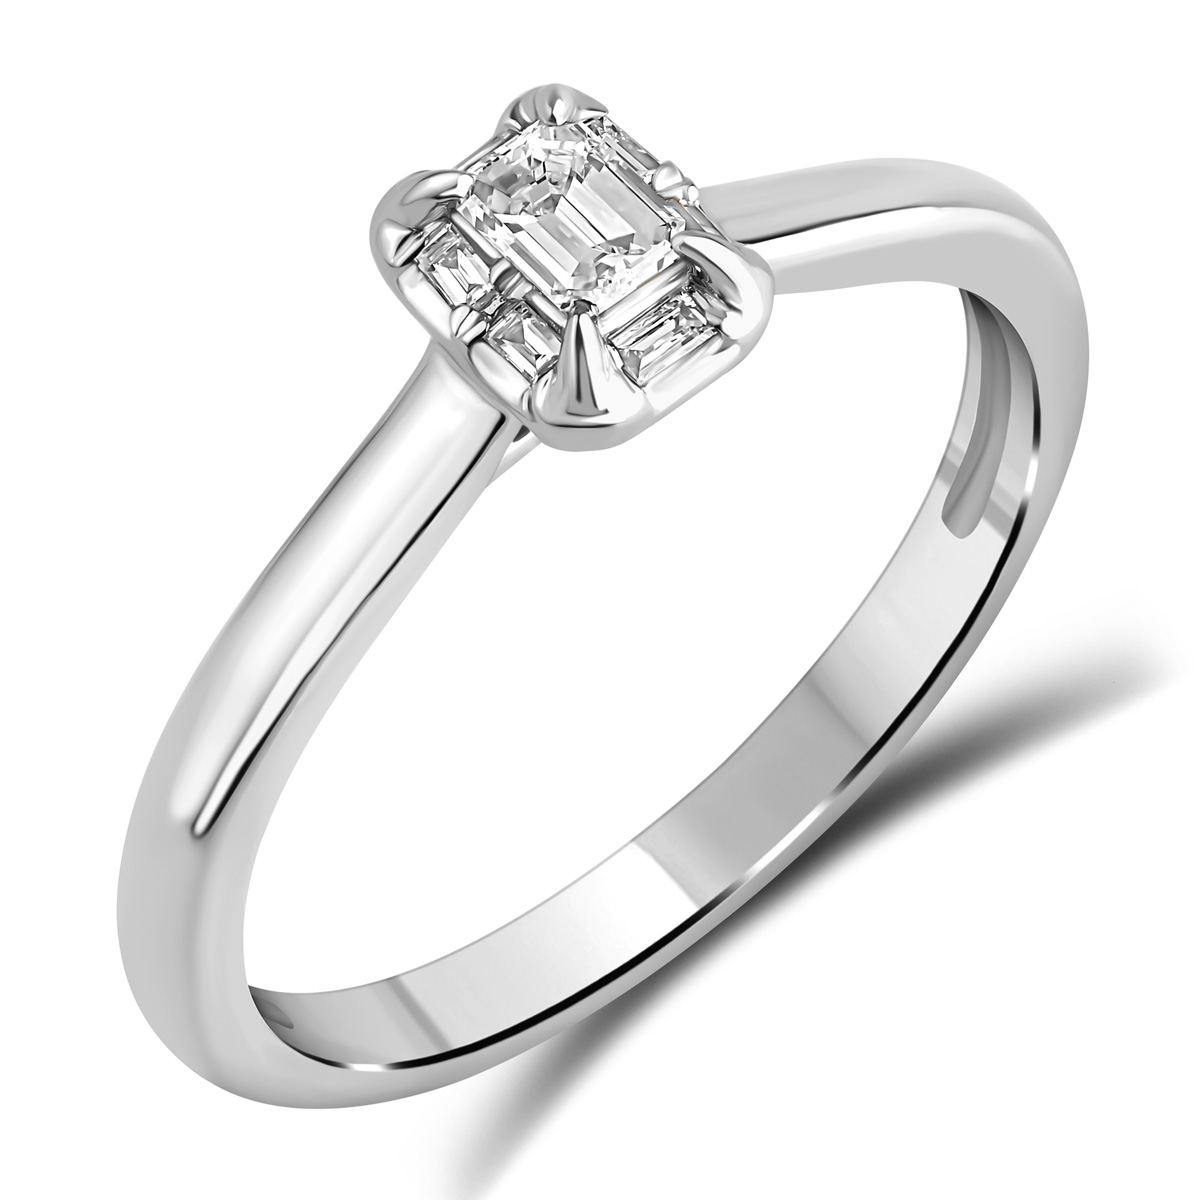 HE53117QWD4WN
14K white Gold Baguette diamond ring